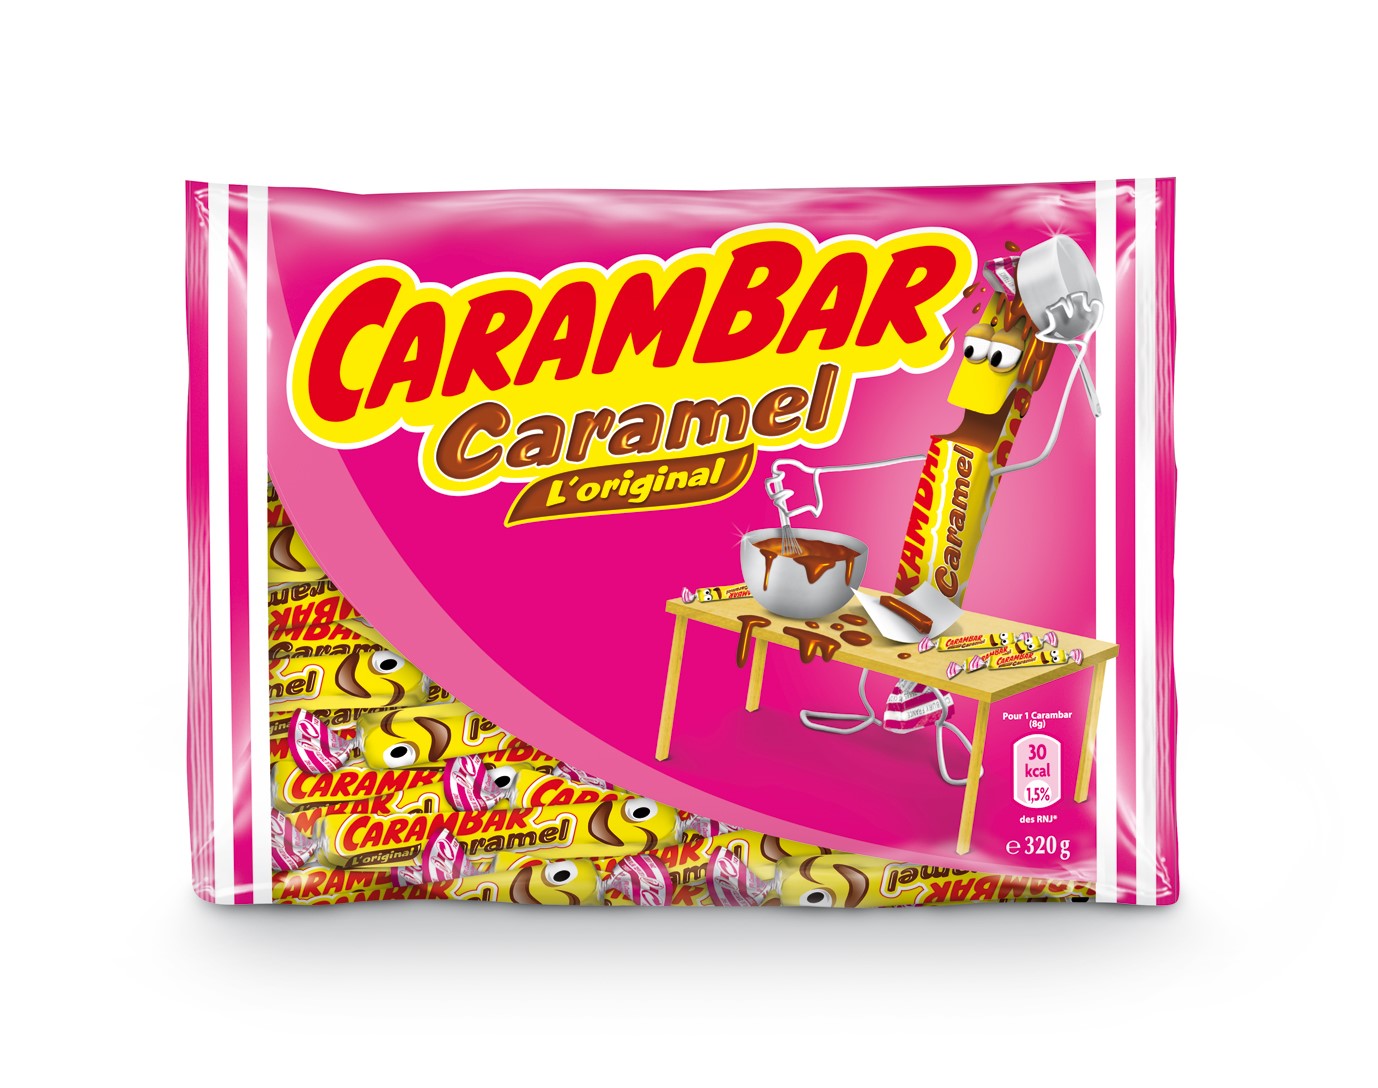 Carambar Caramel sweets